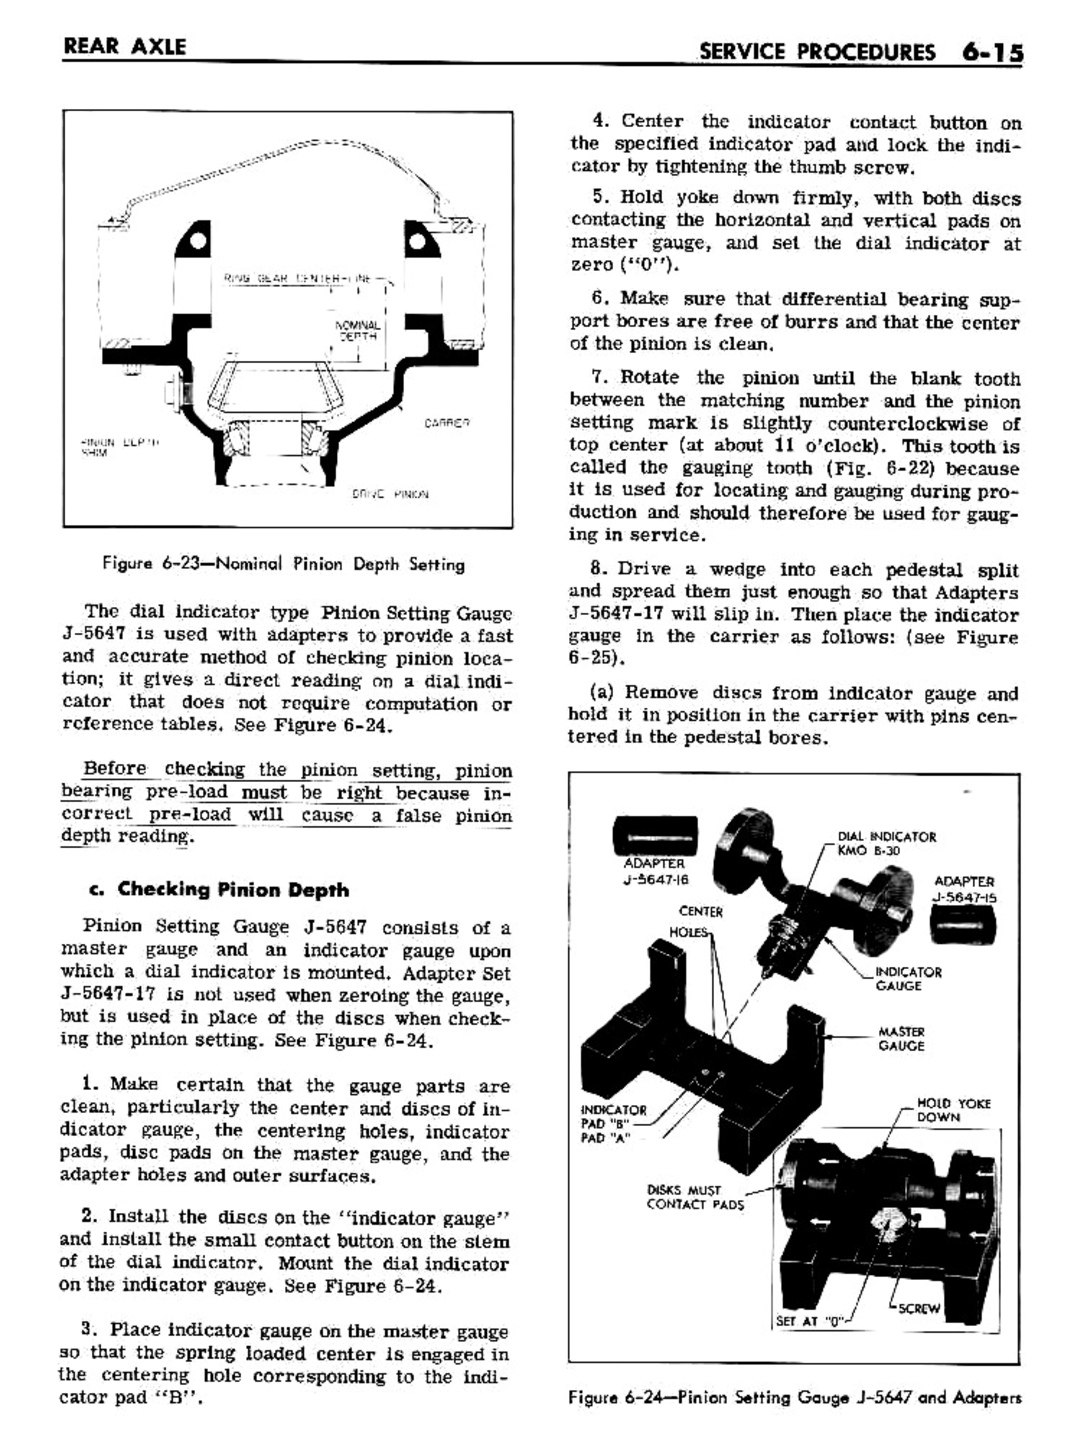 n_06 1961 Buick Shop Manual - Rear Axle-015-015.jpg